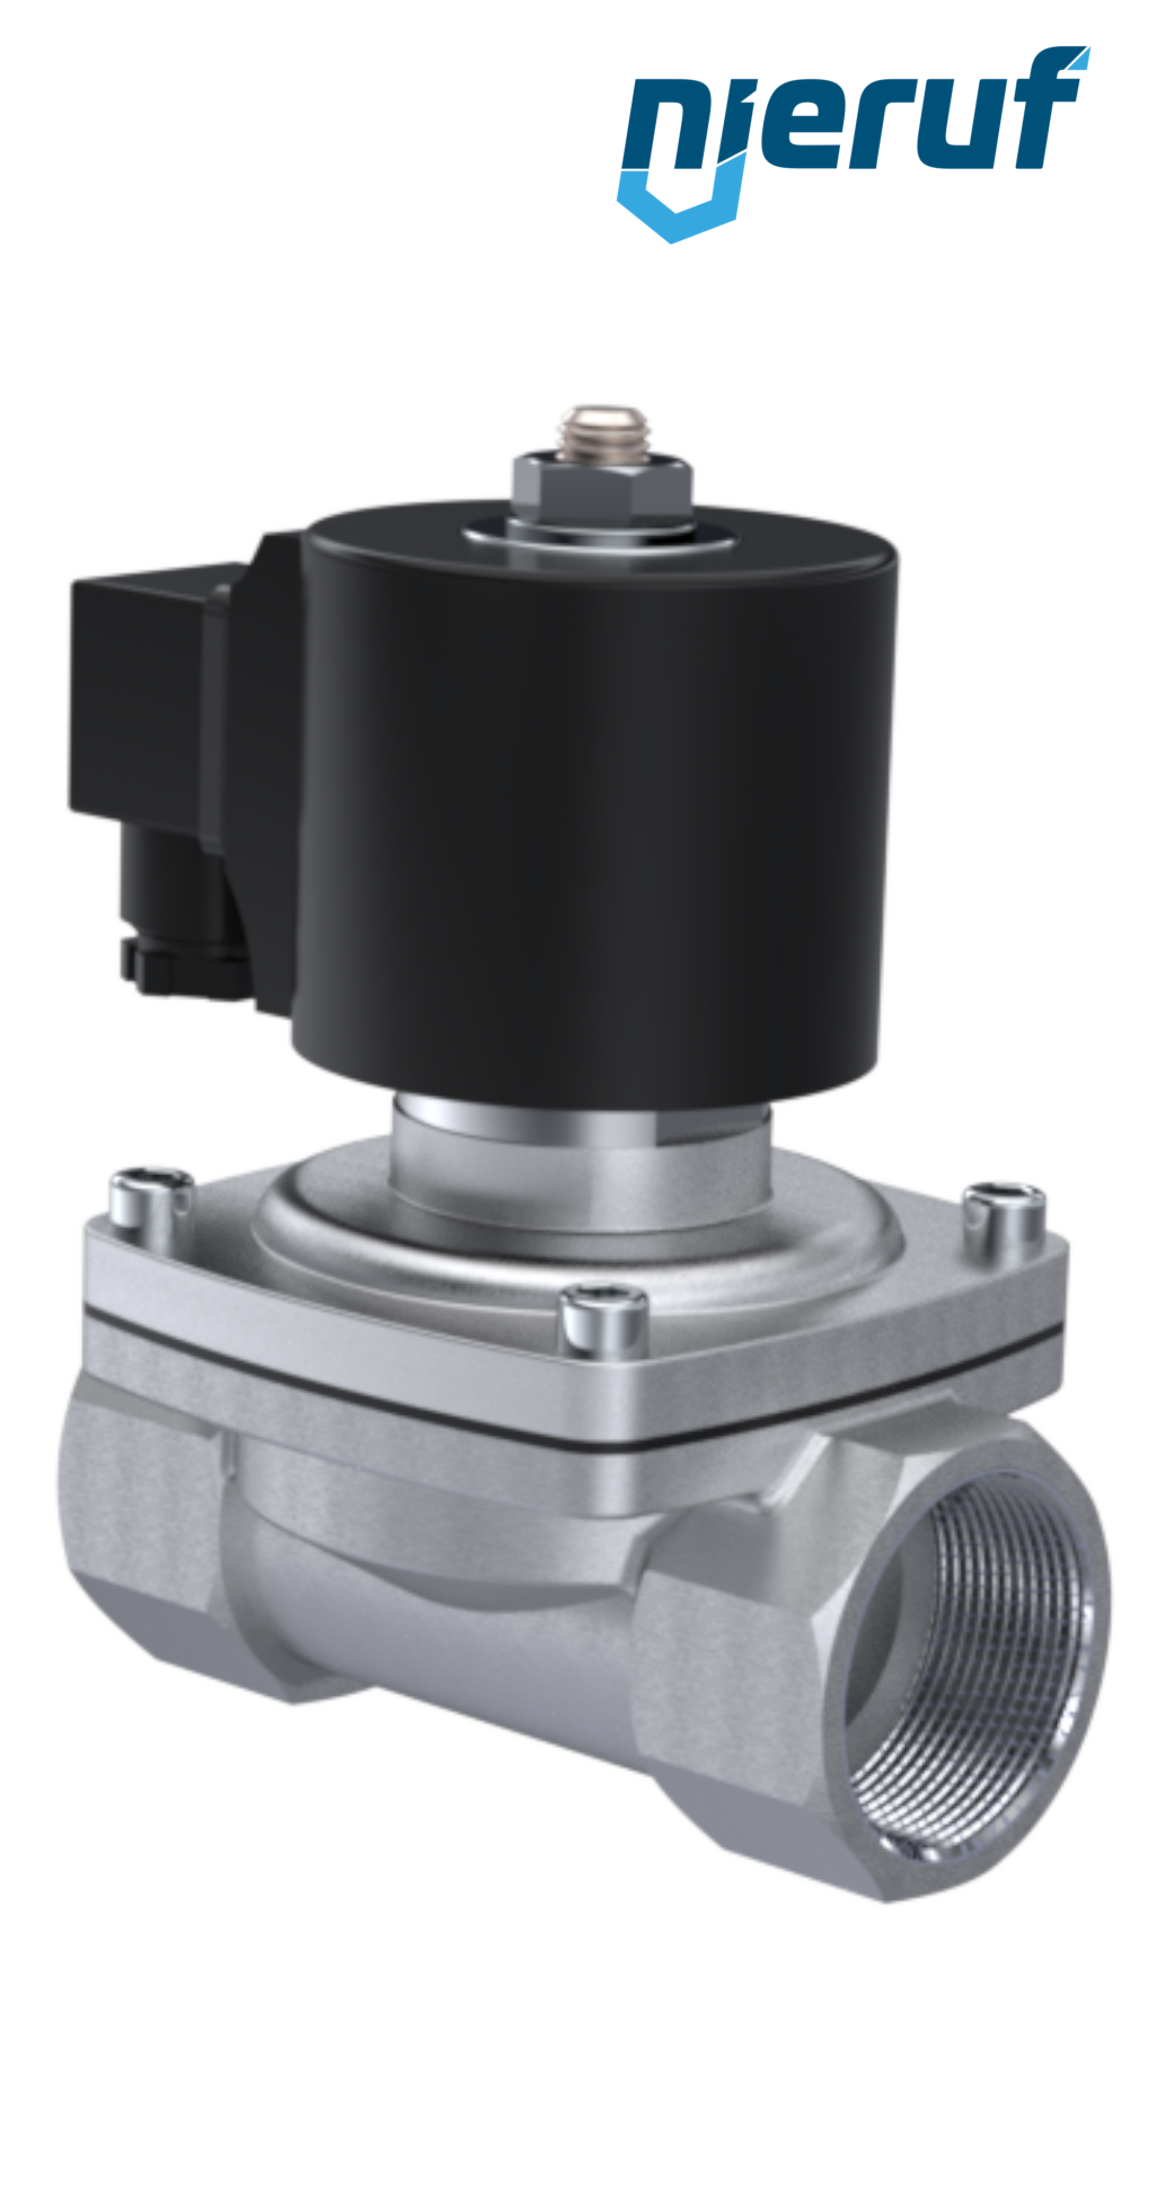 Solenoid valve DN16 G 1/2" Inch FKM 110V stainless steel 1.4308